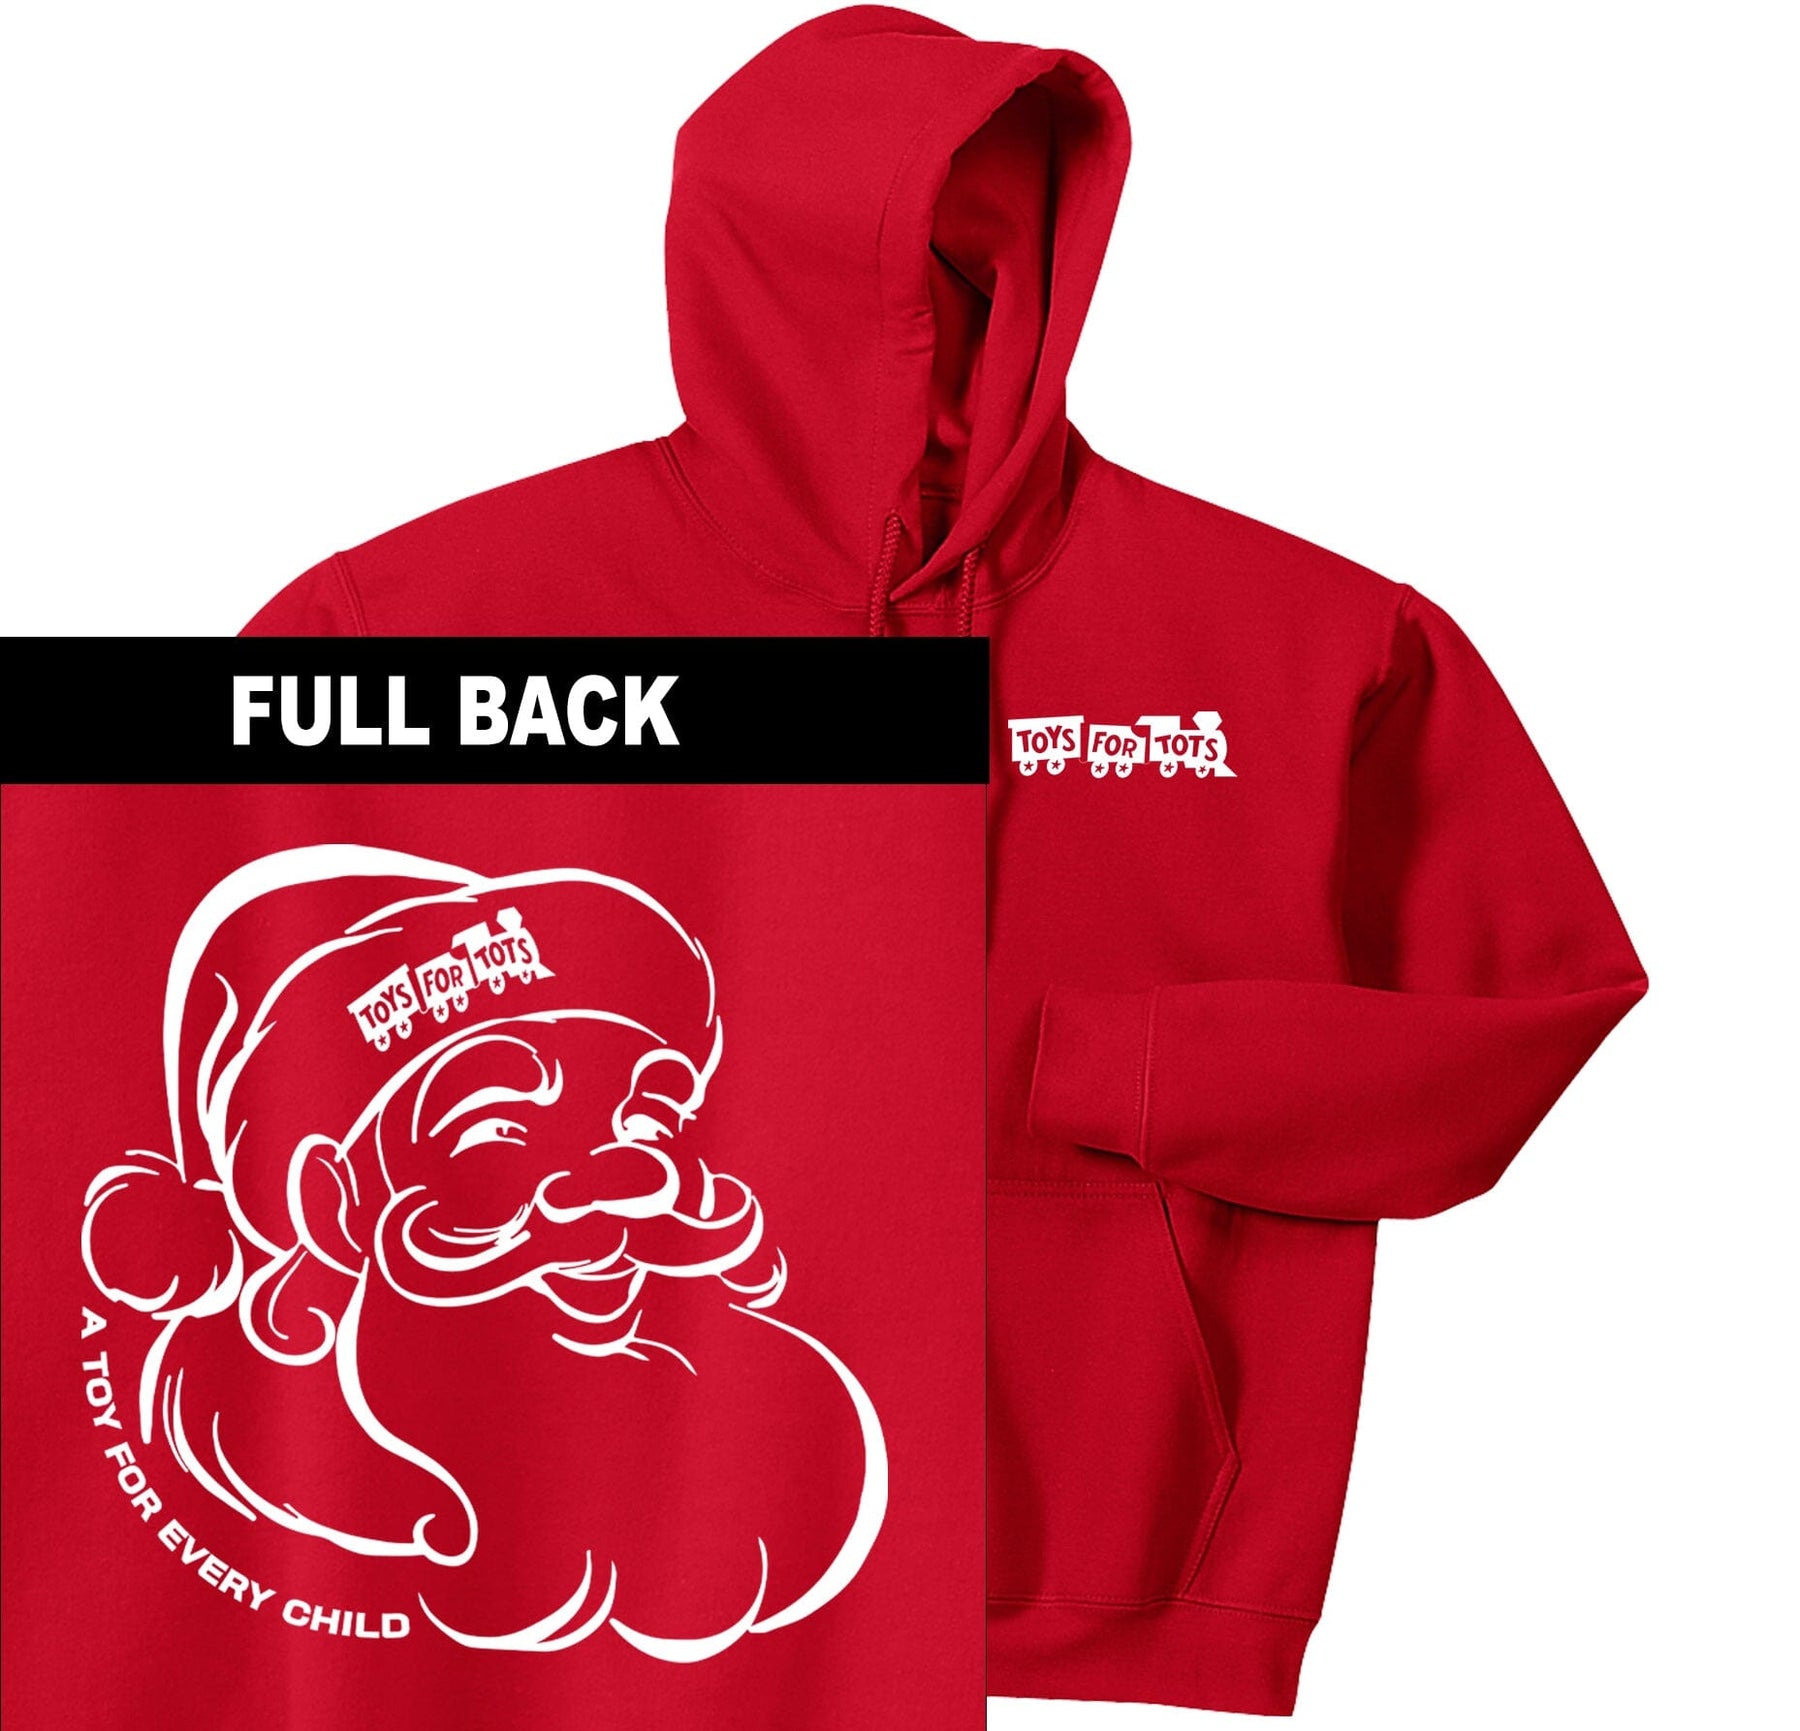 Santa TFT 2-Sided Hoodie TFT Sweatshirt/hoodie marinecorpsdirecttft S RED 